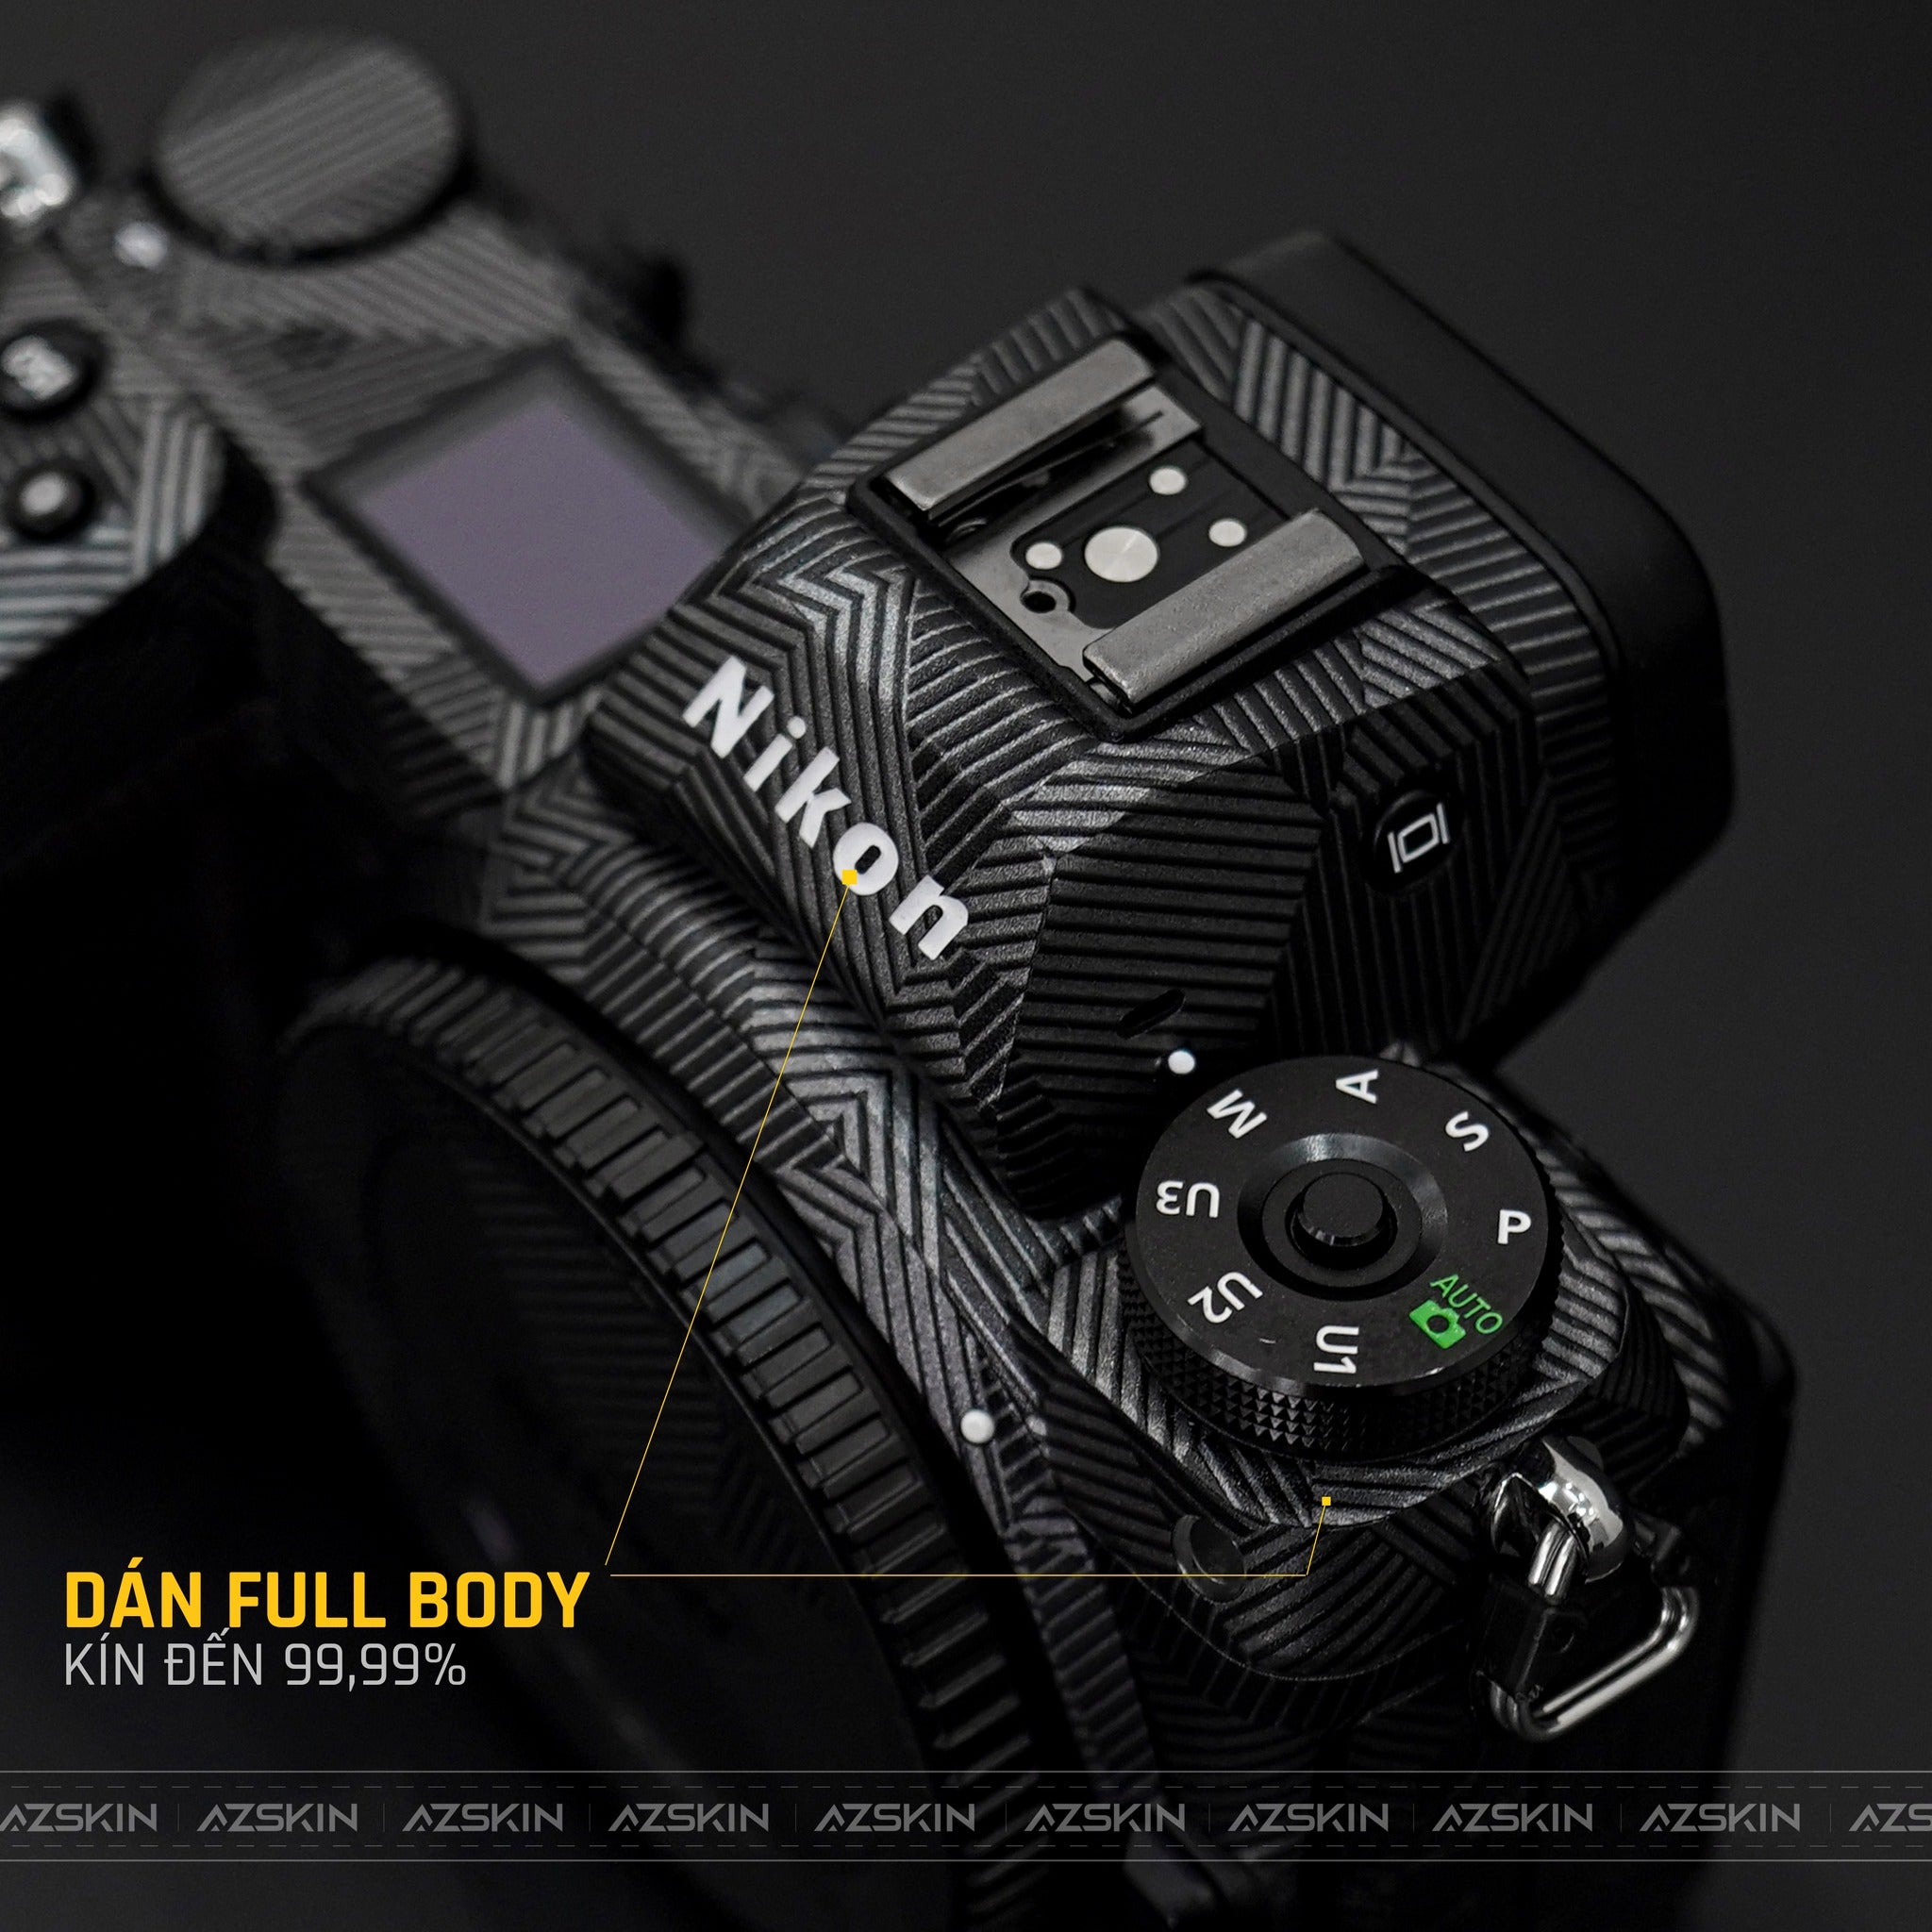 Skin máy ảnh Nikon thiết kế bởi Azskin